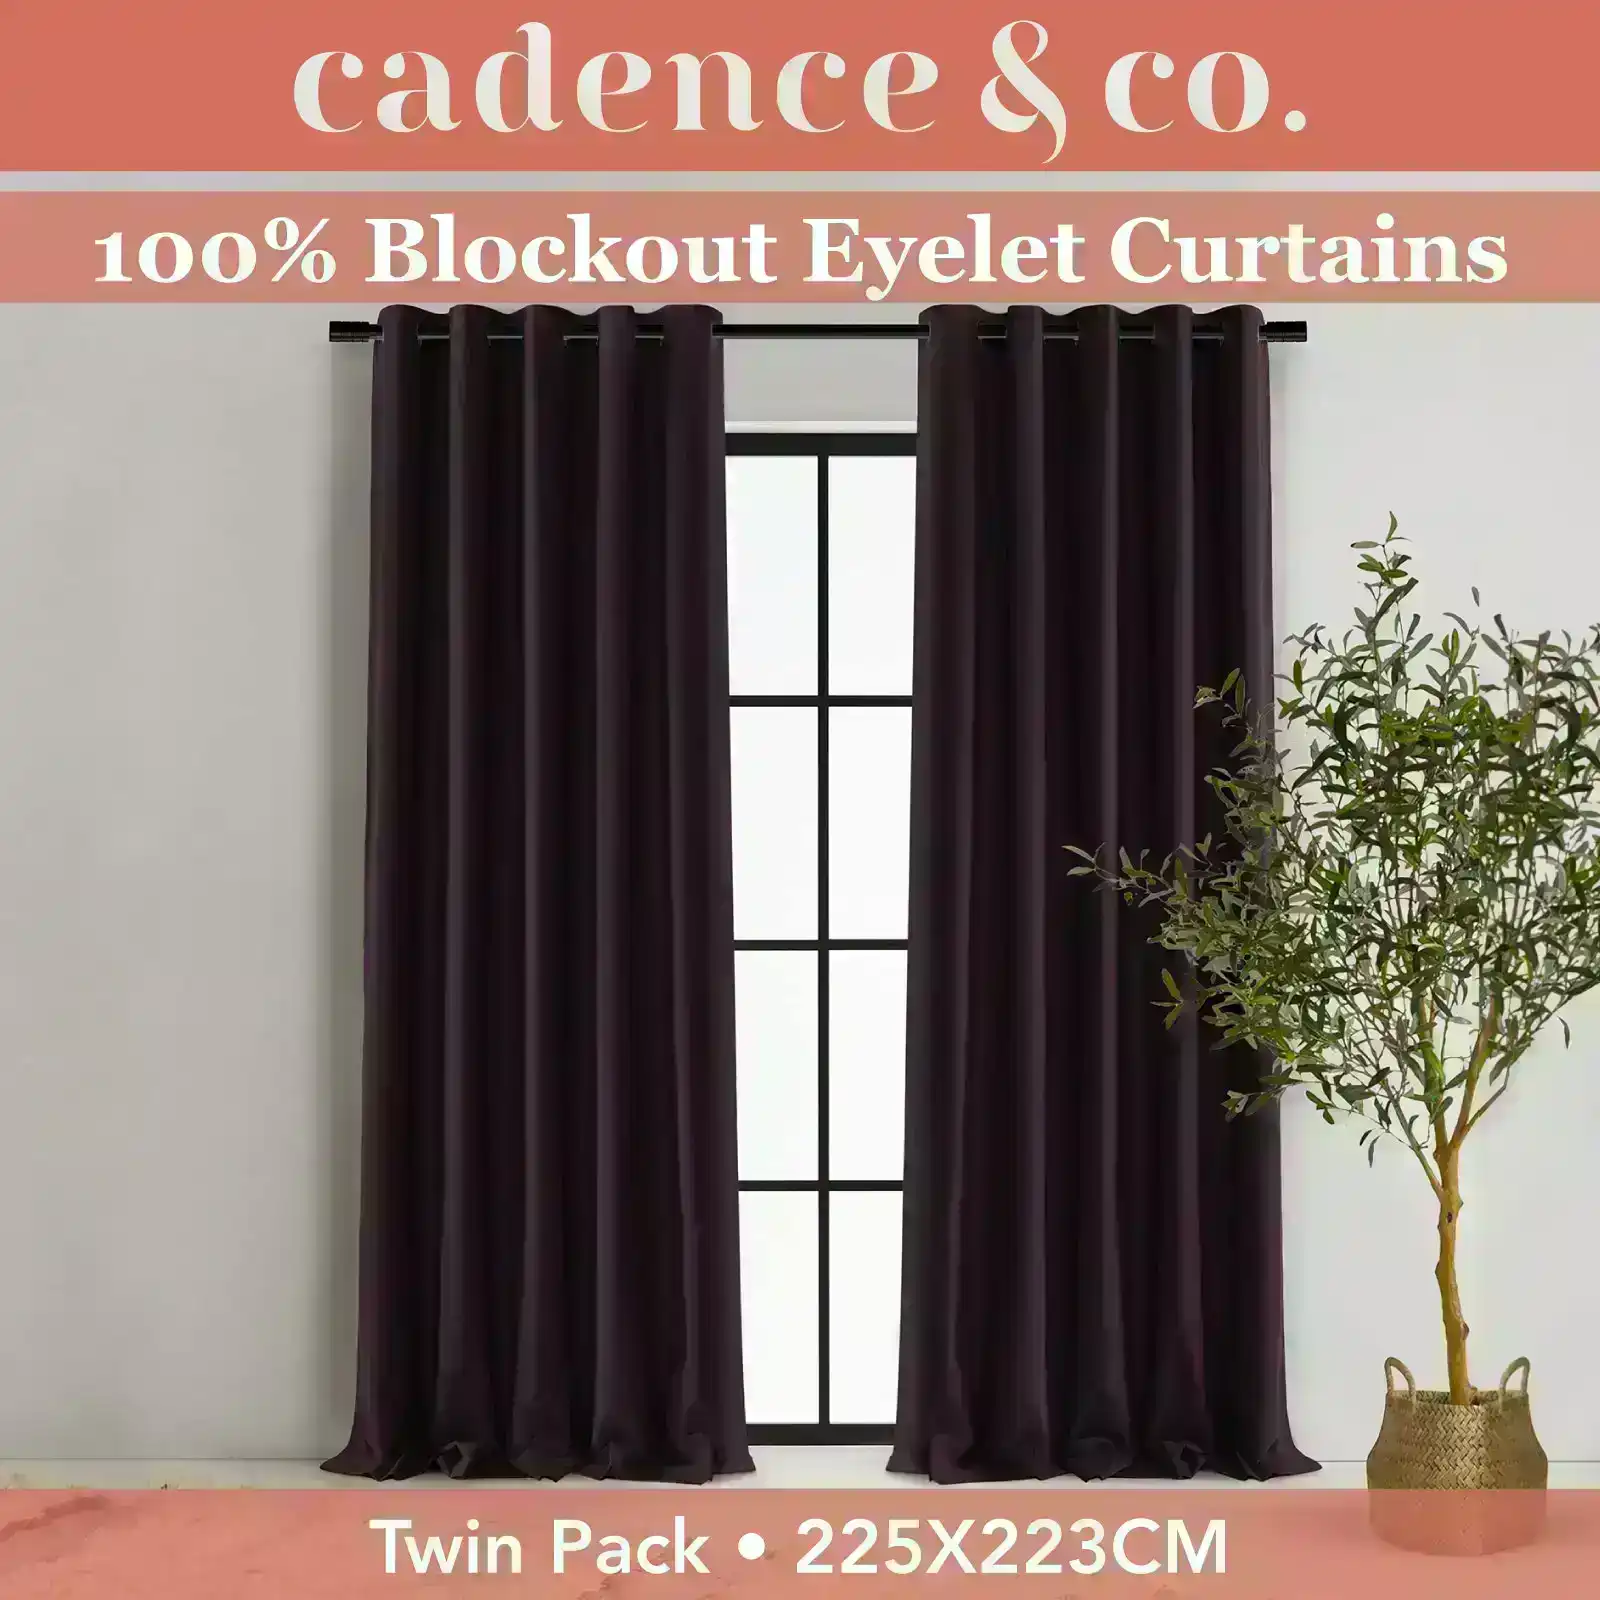 Cadence & Co Byron Matte Velvet 100% Blockout Eyelet Curtains Twin Pack Aubergine 225x223cm